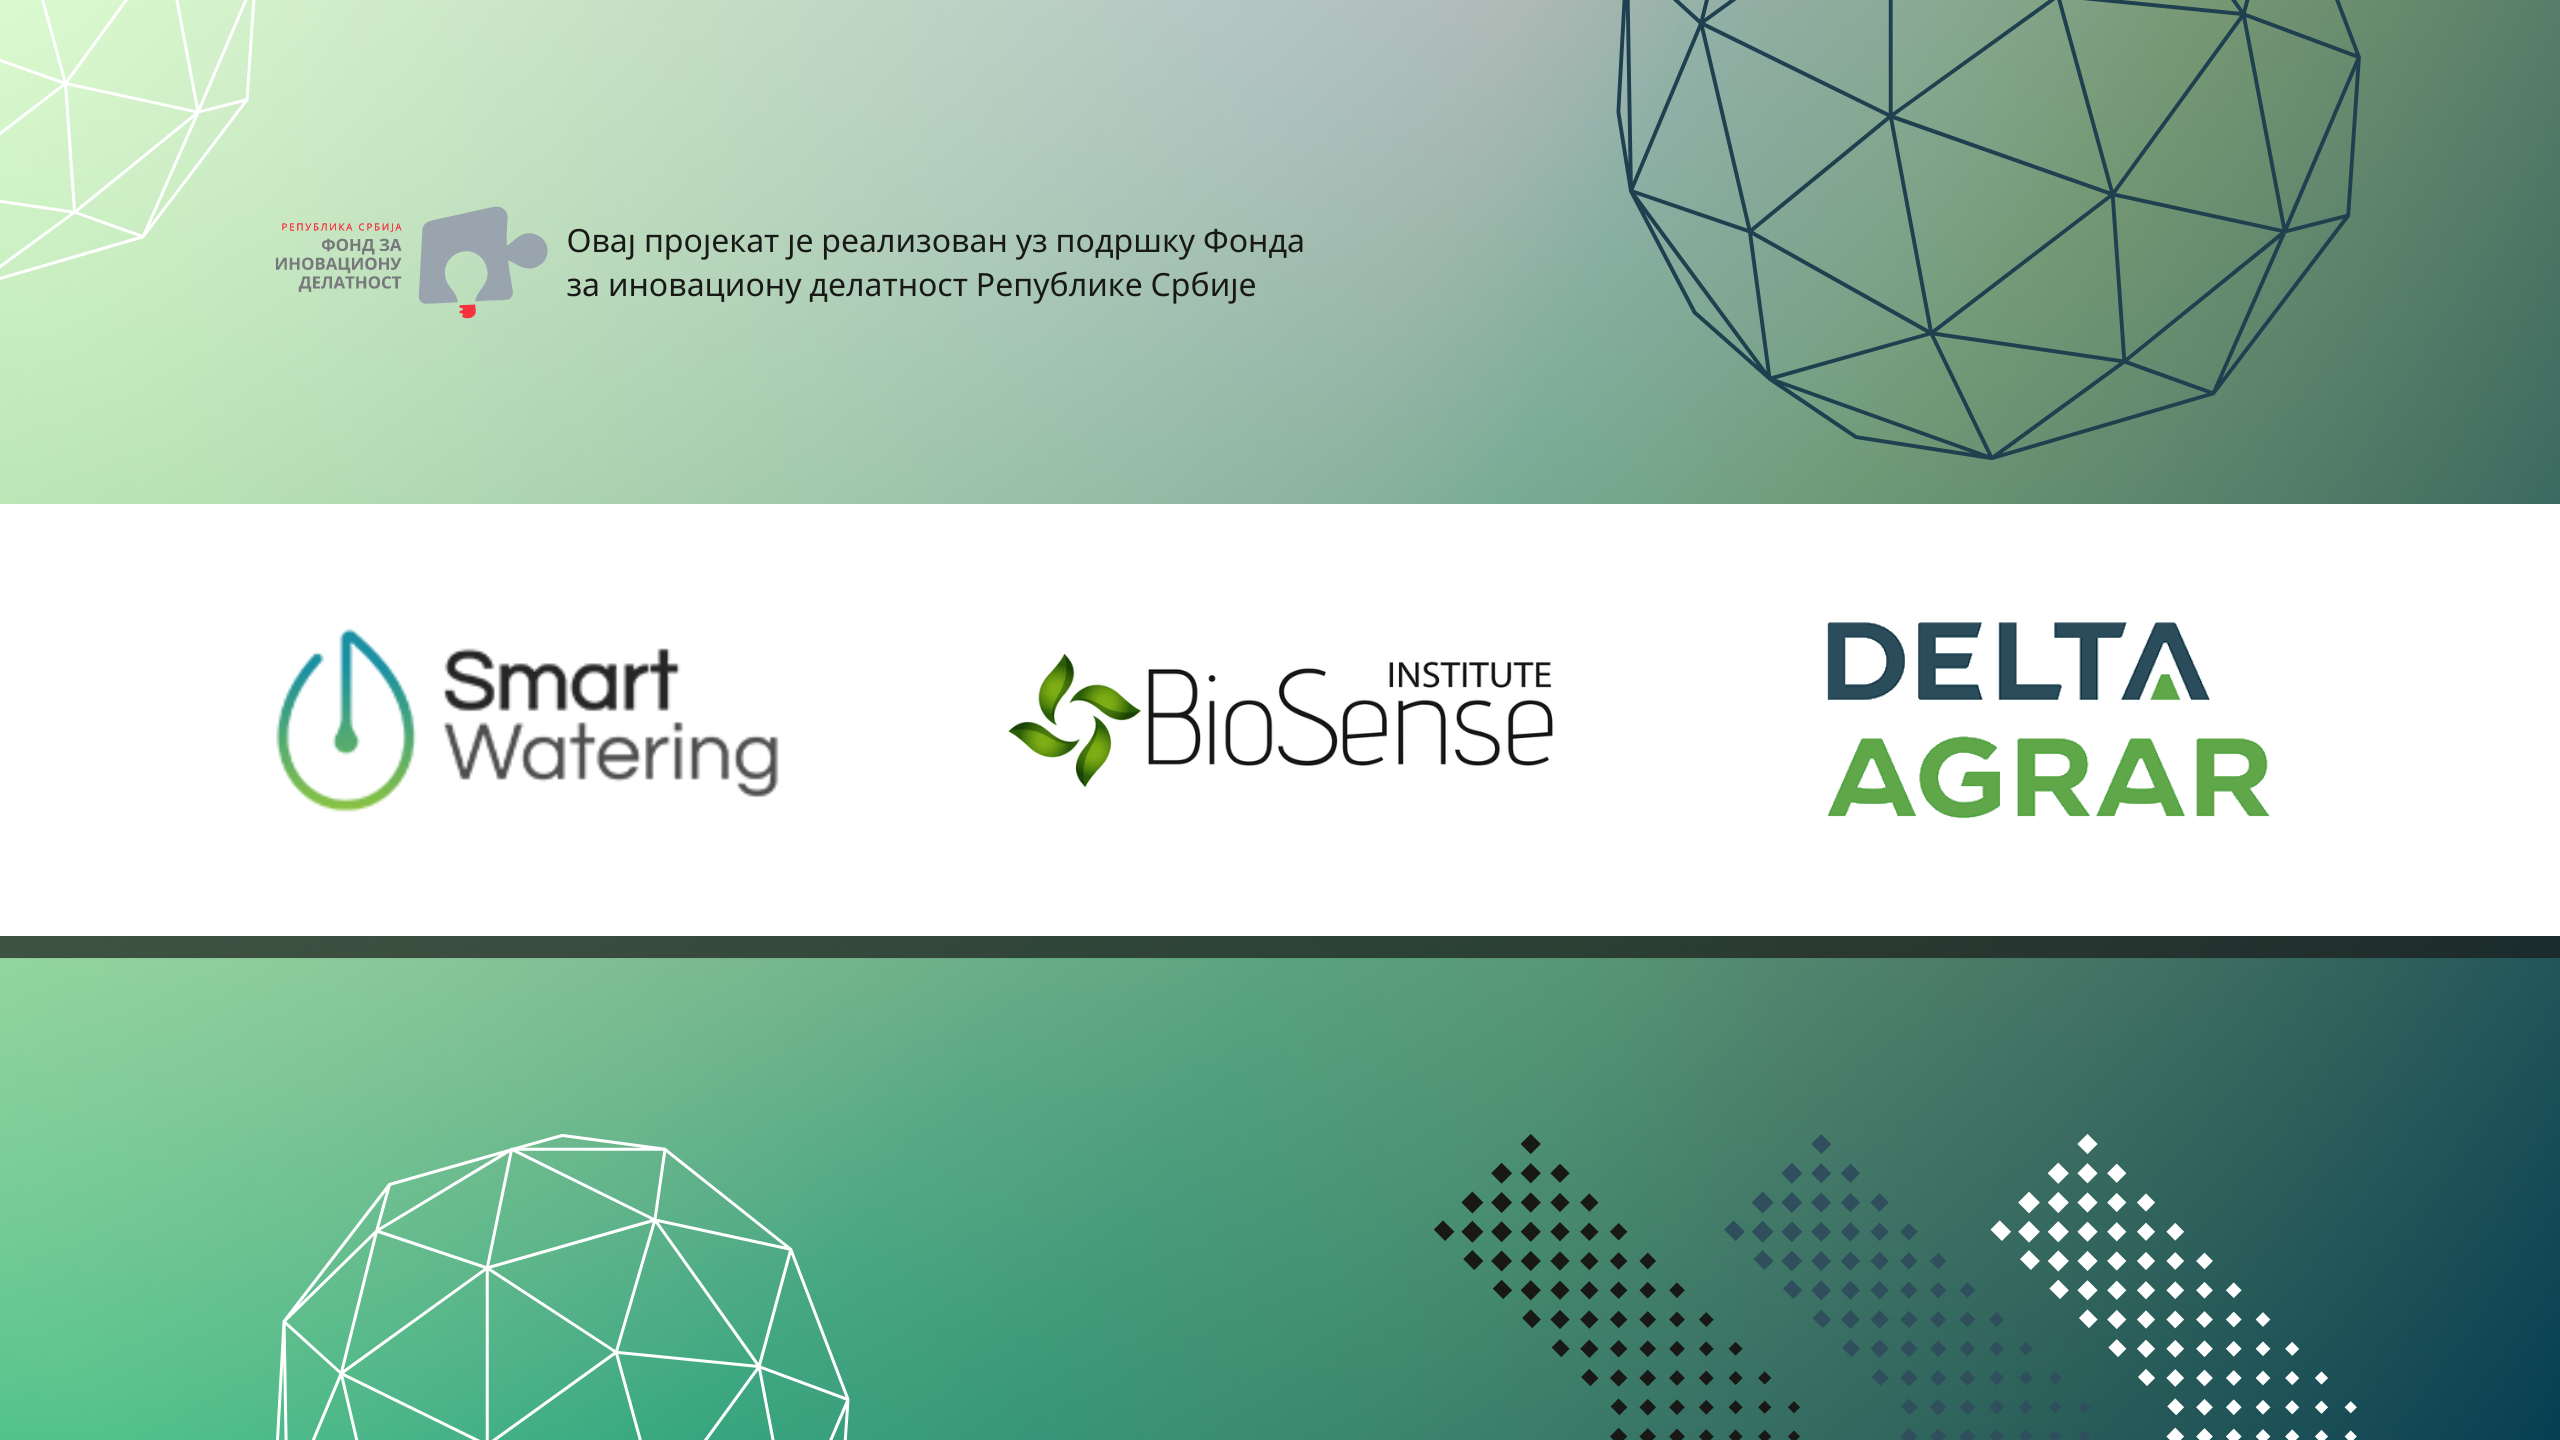 smart-watering-delta-agrar-biosens-dnevne preporuke-fond-za-inovacionu-delatnost-republike-srbije